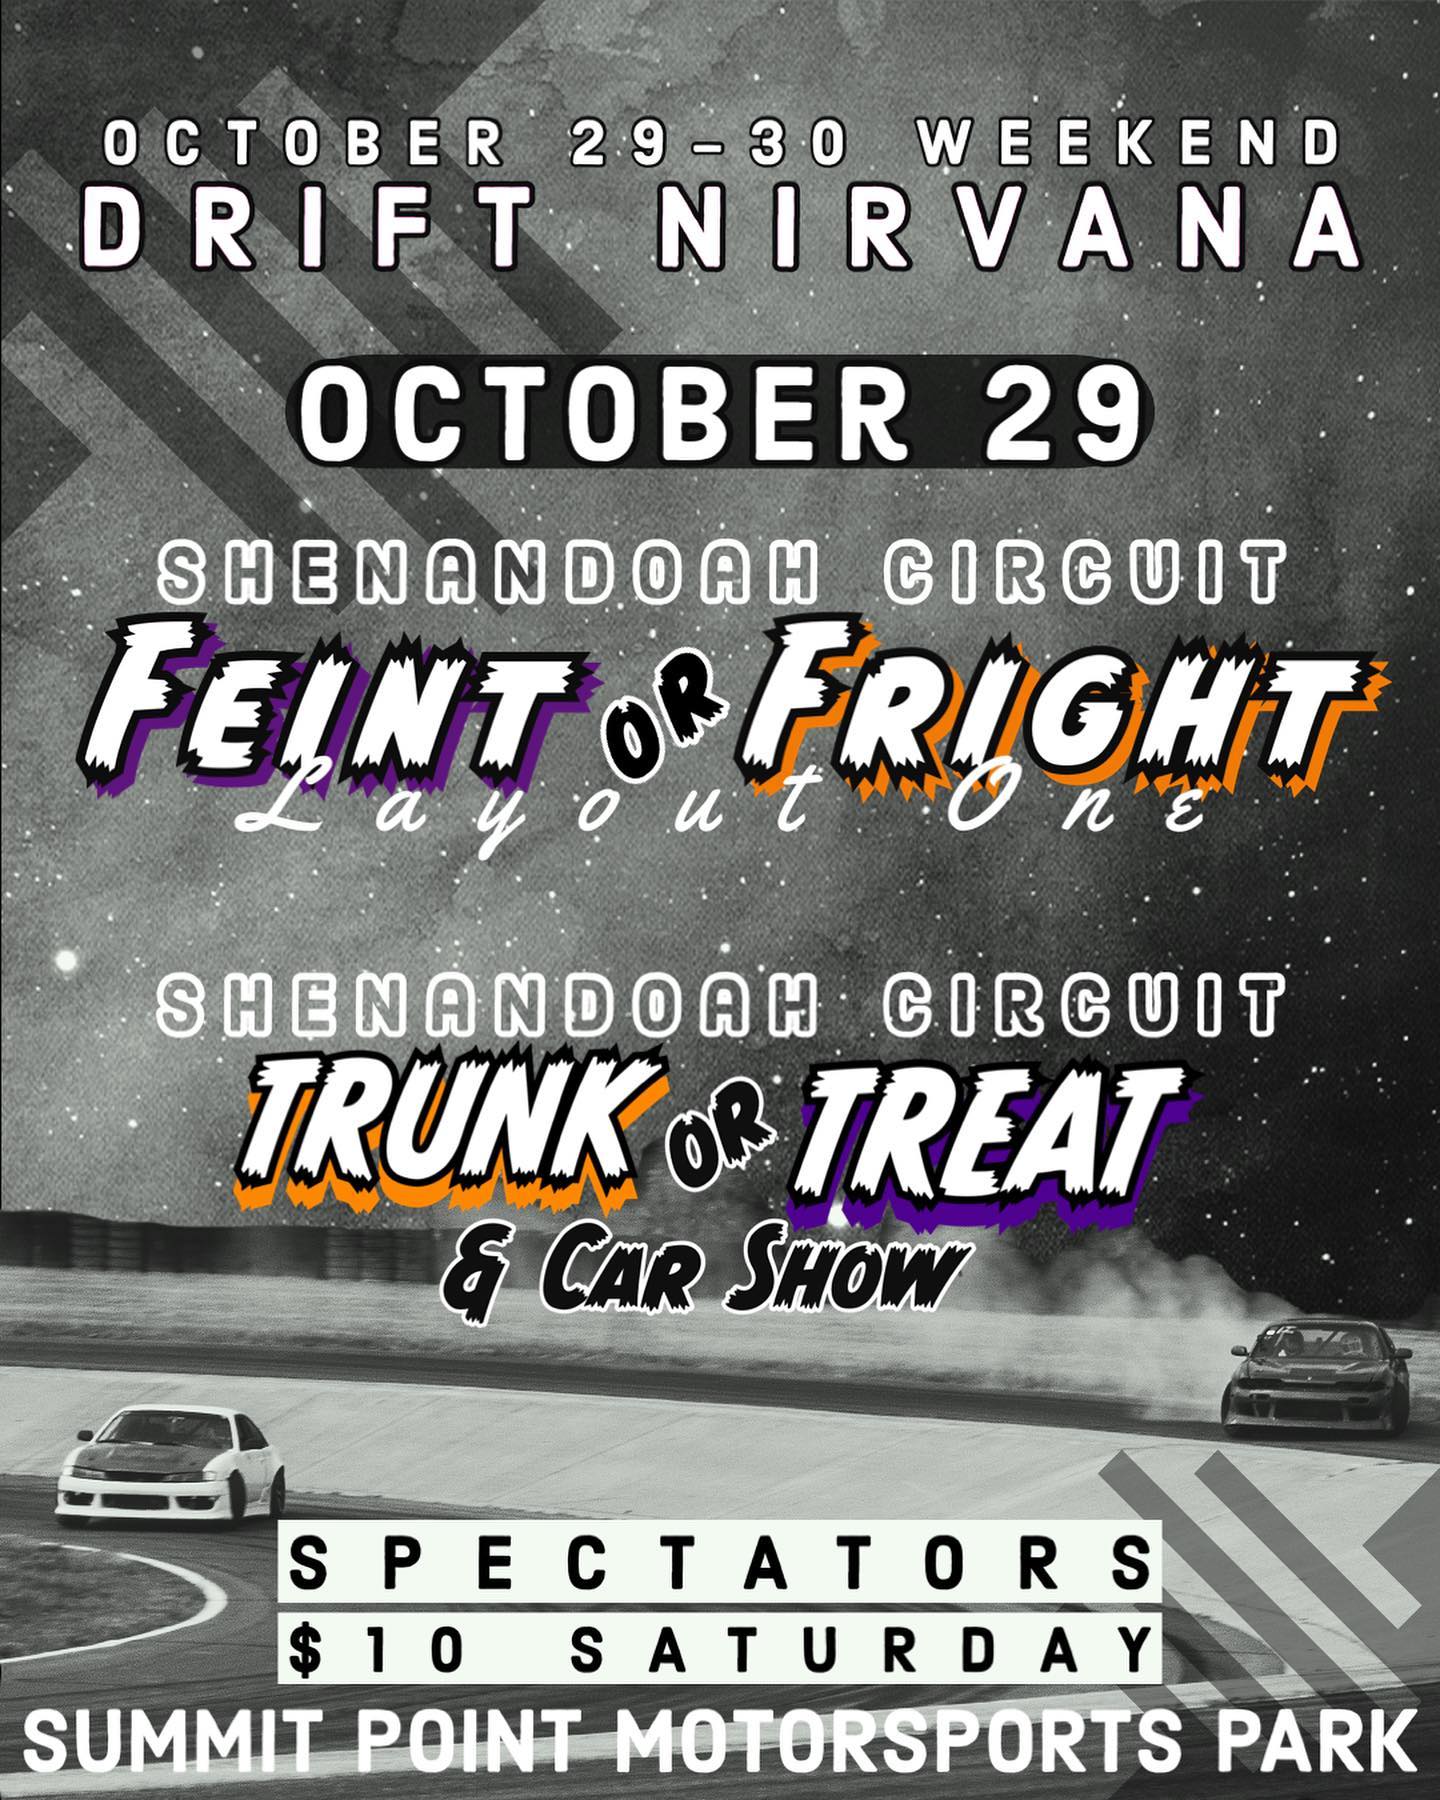 Drift Nirvana Feint or Fright Oct 29-30